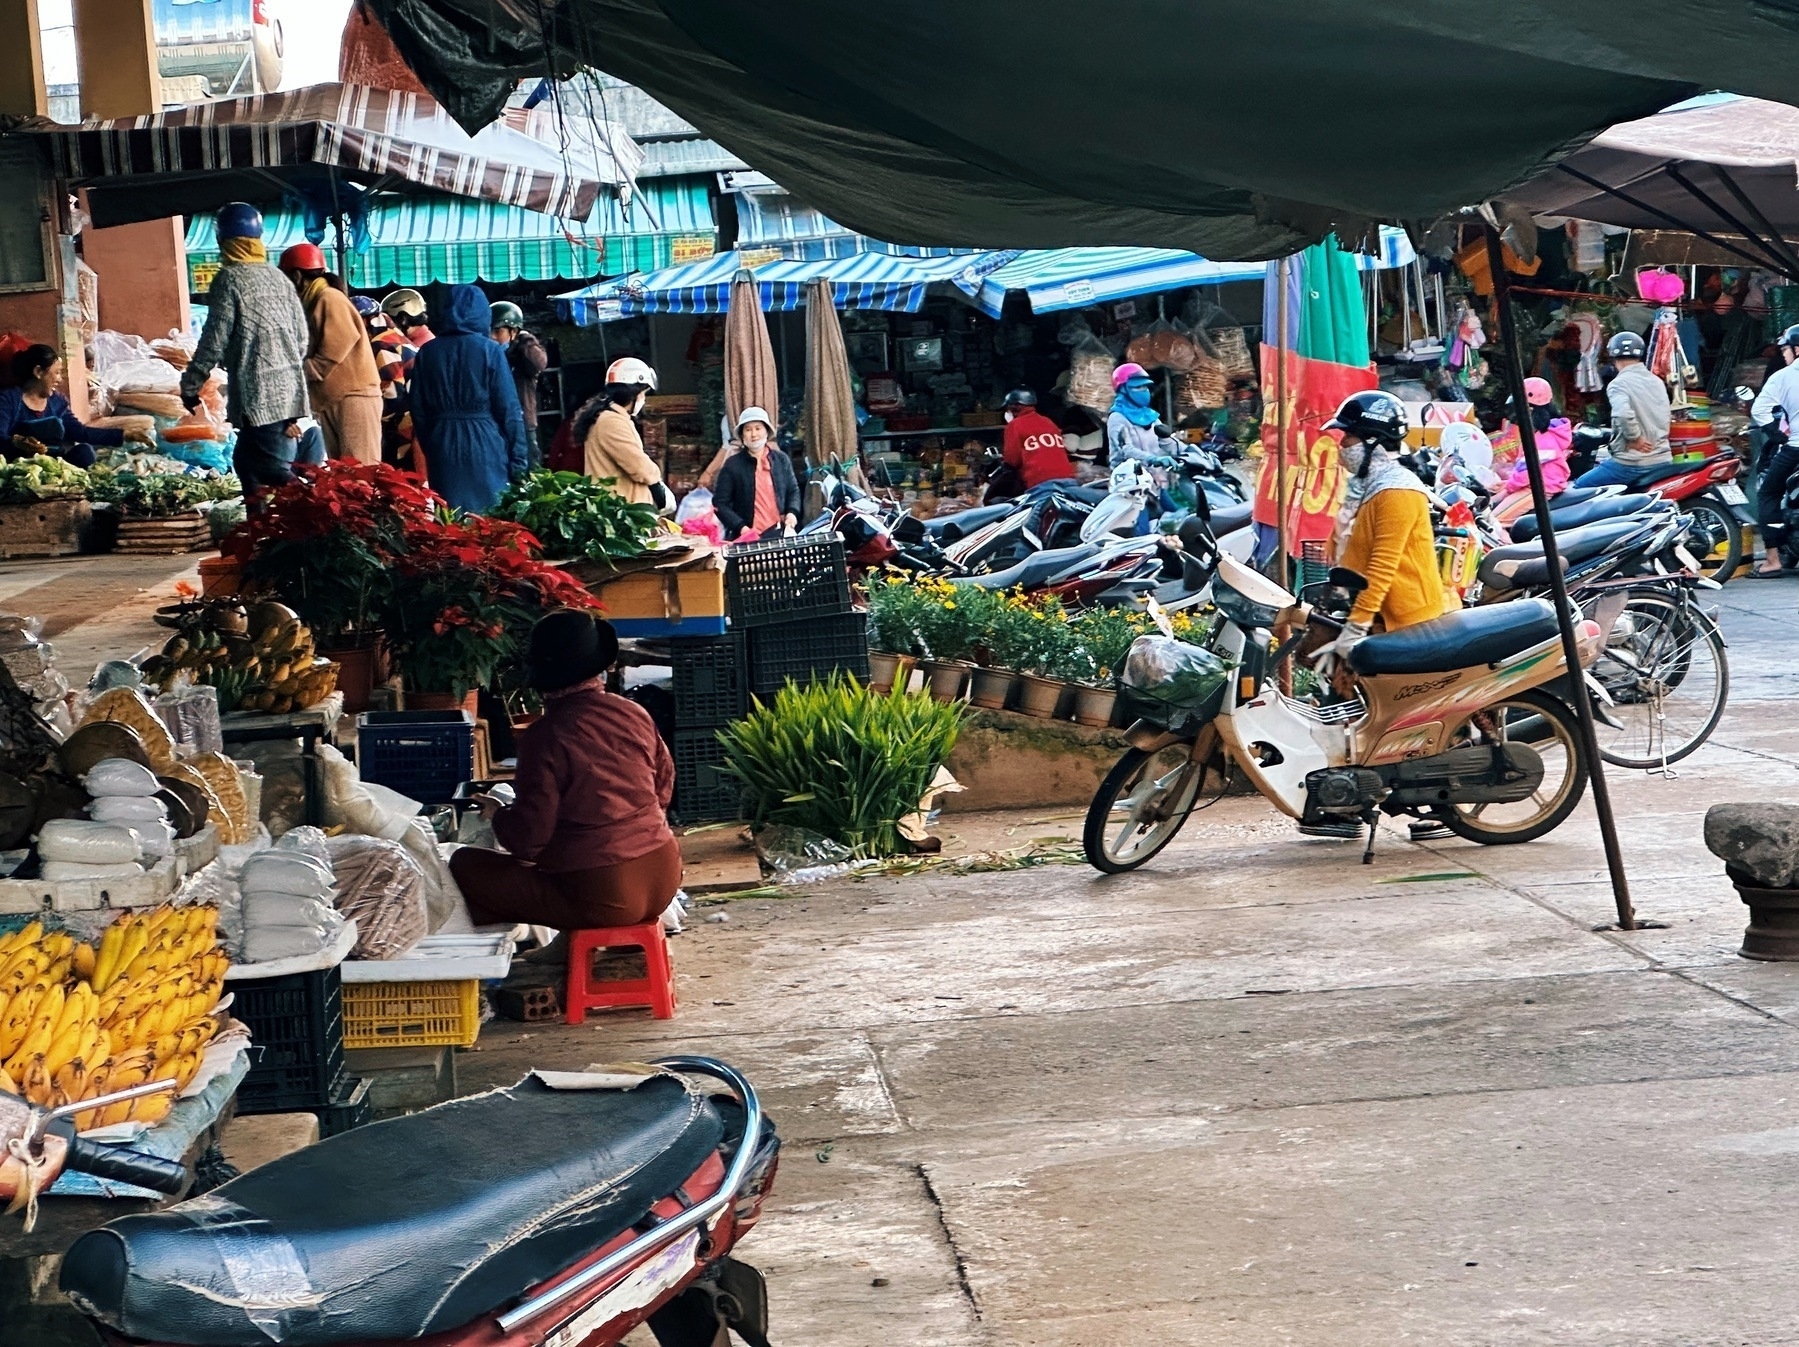 Pre-Tet traditional market